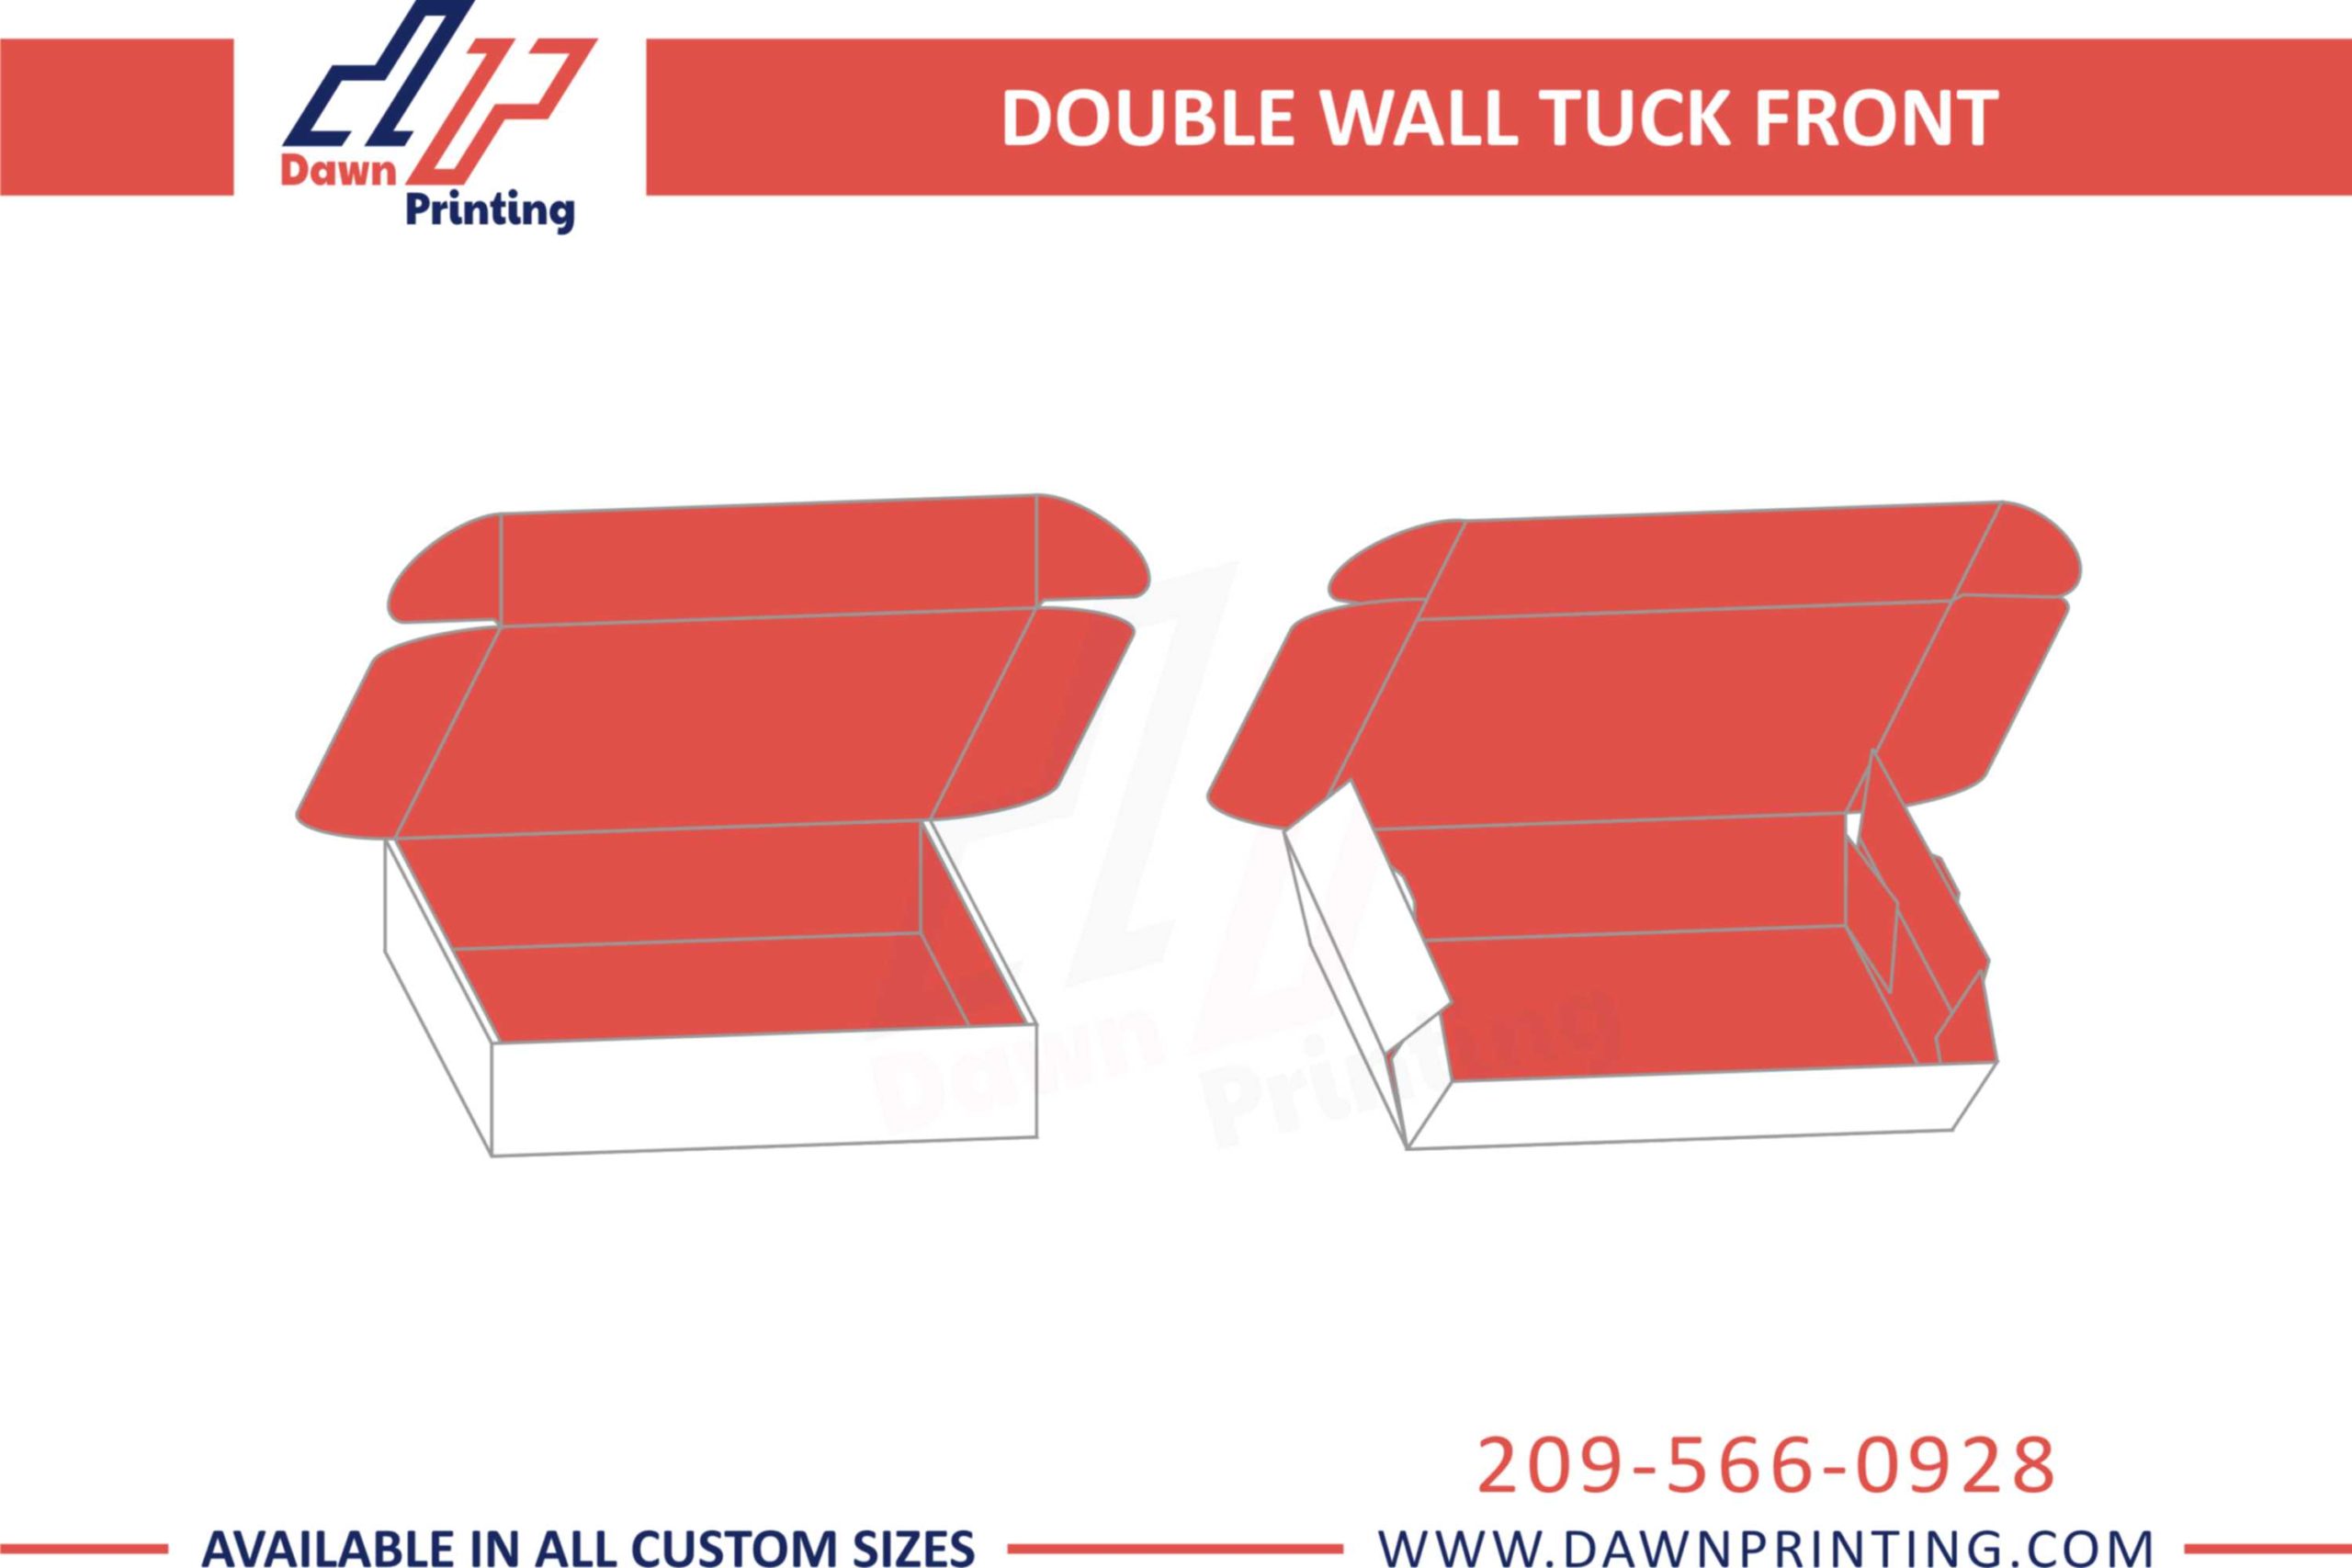 Printed Double Locked Wall Lid Boxes - Dawn Prinitng